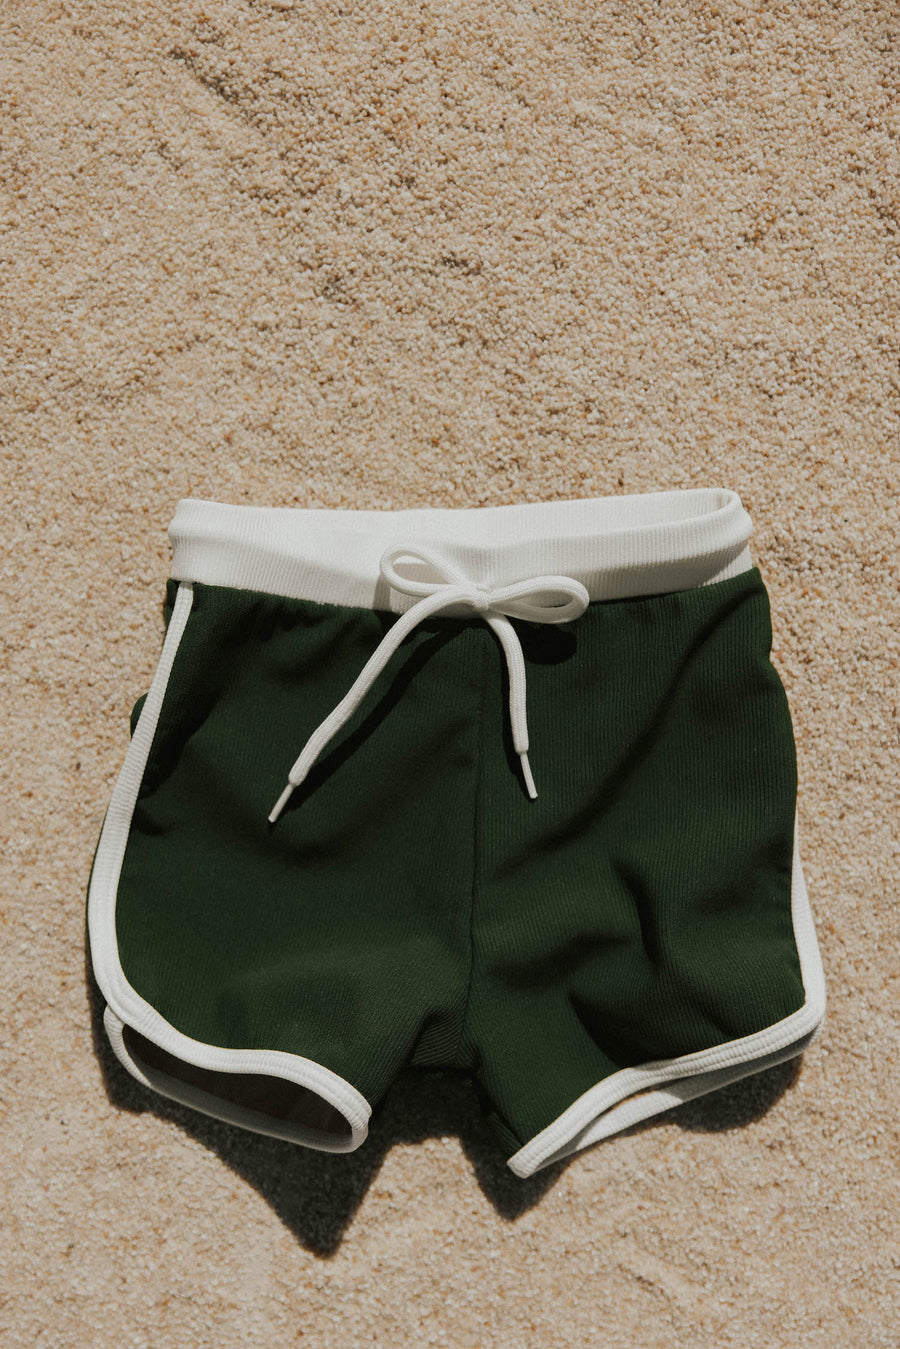 Infant and Toddler Dark green swim trunks adjustable waist